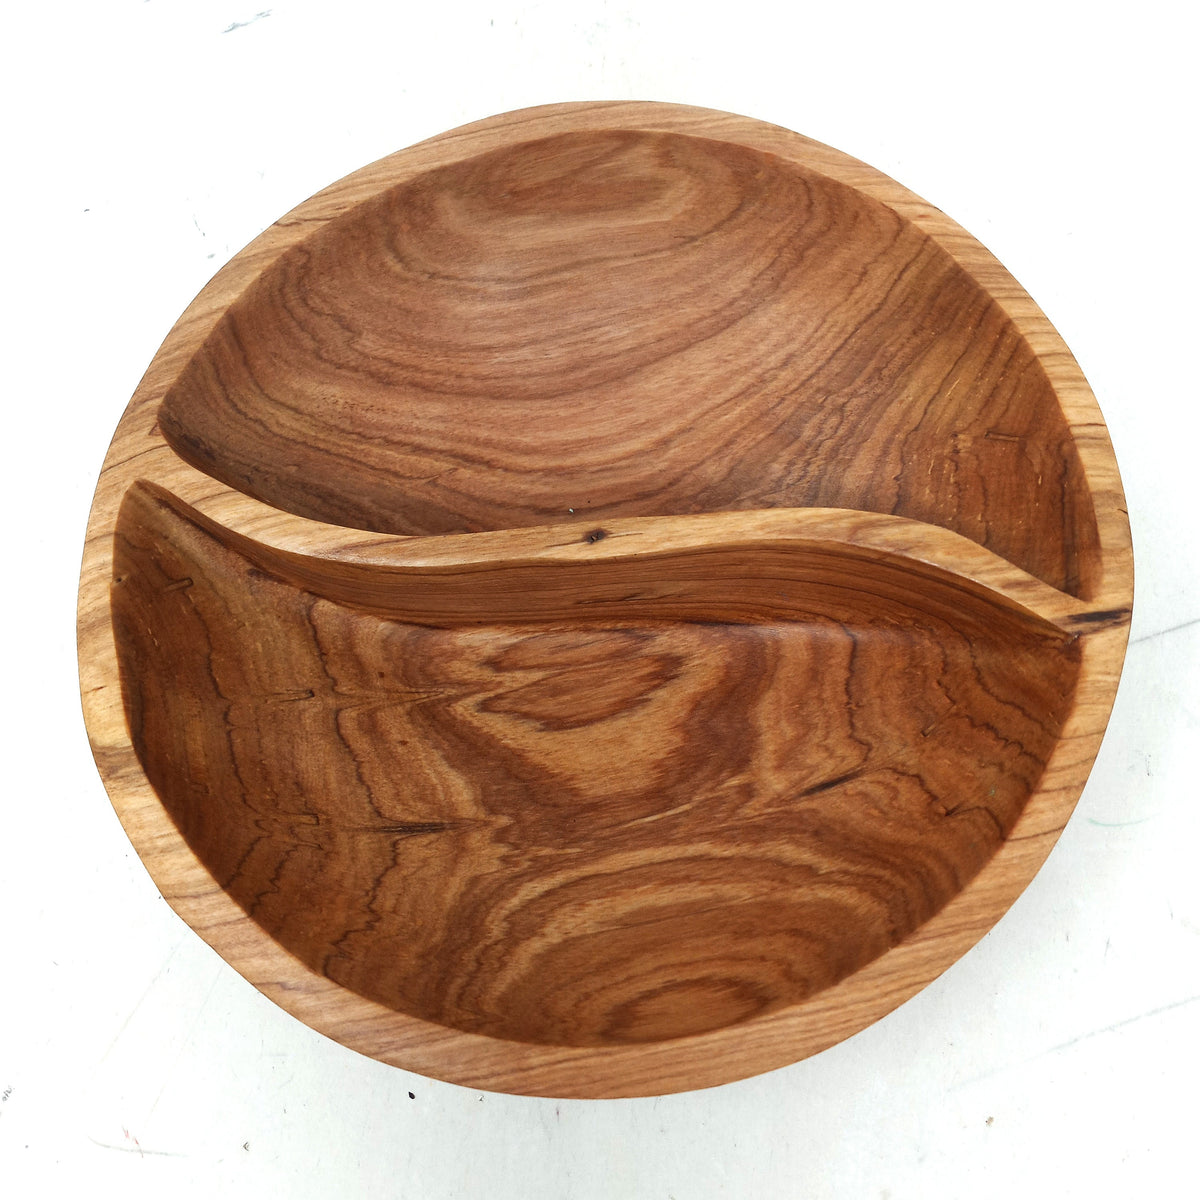 Bowls for eating, Wooden bowl round, Divided wooden bowl, Round wooden bowl, wooden snack bowl, small salad bowl, Olivewood bowl, salsa bowl